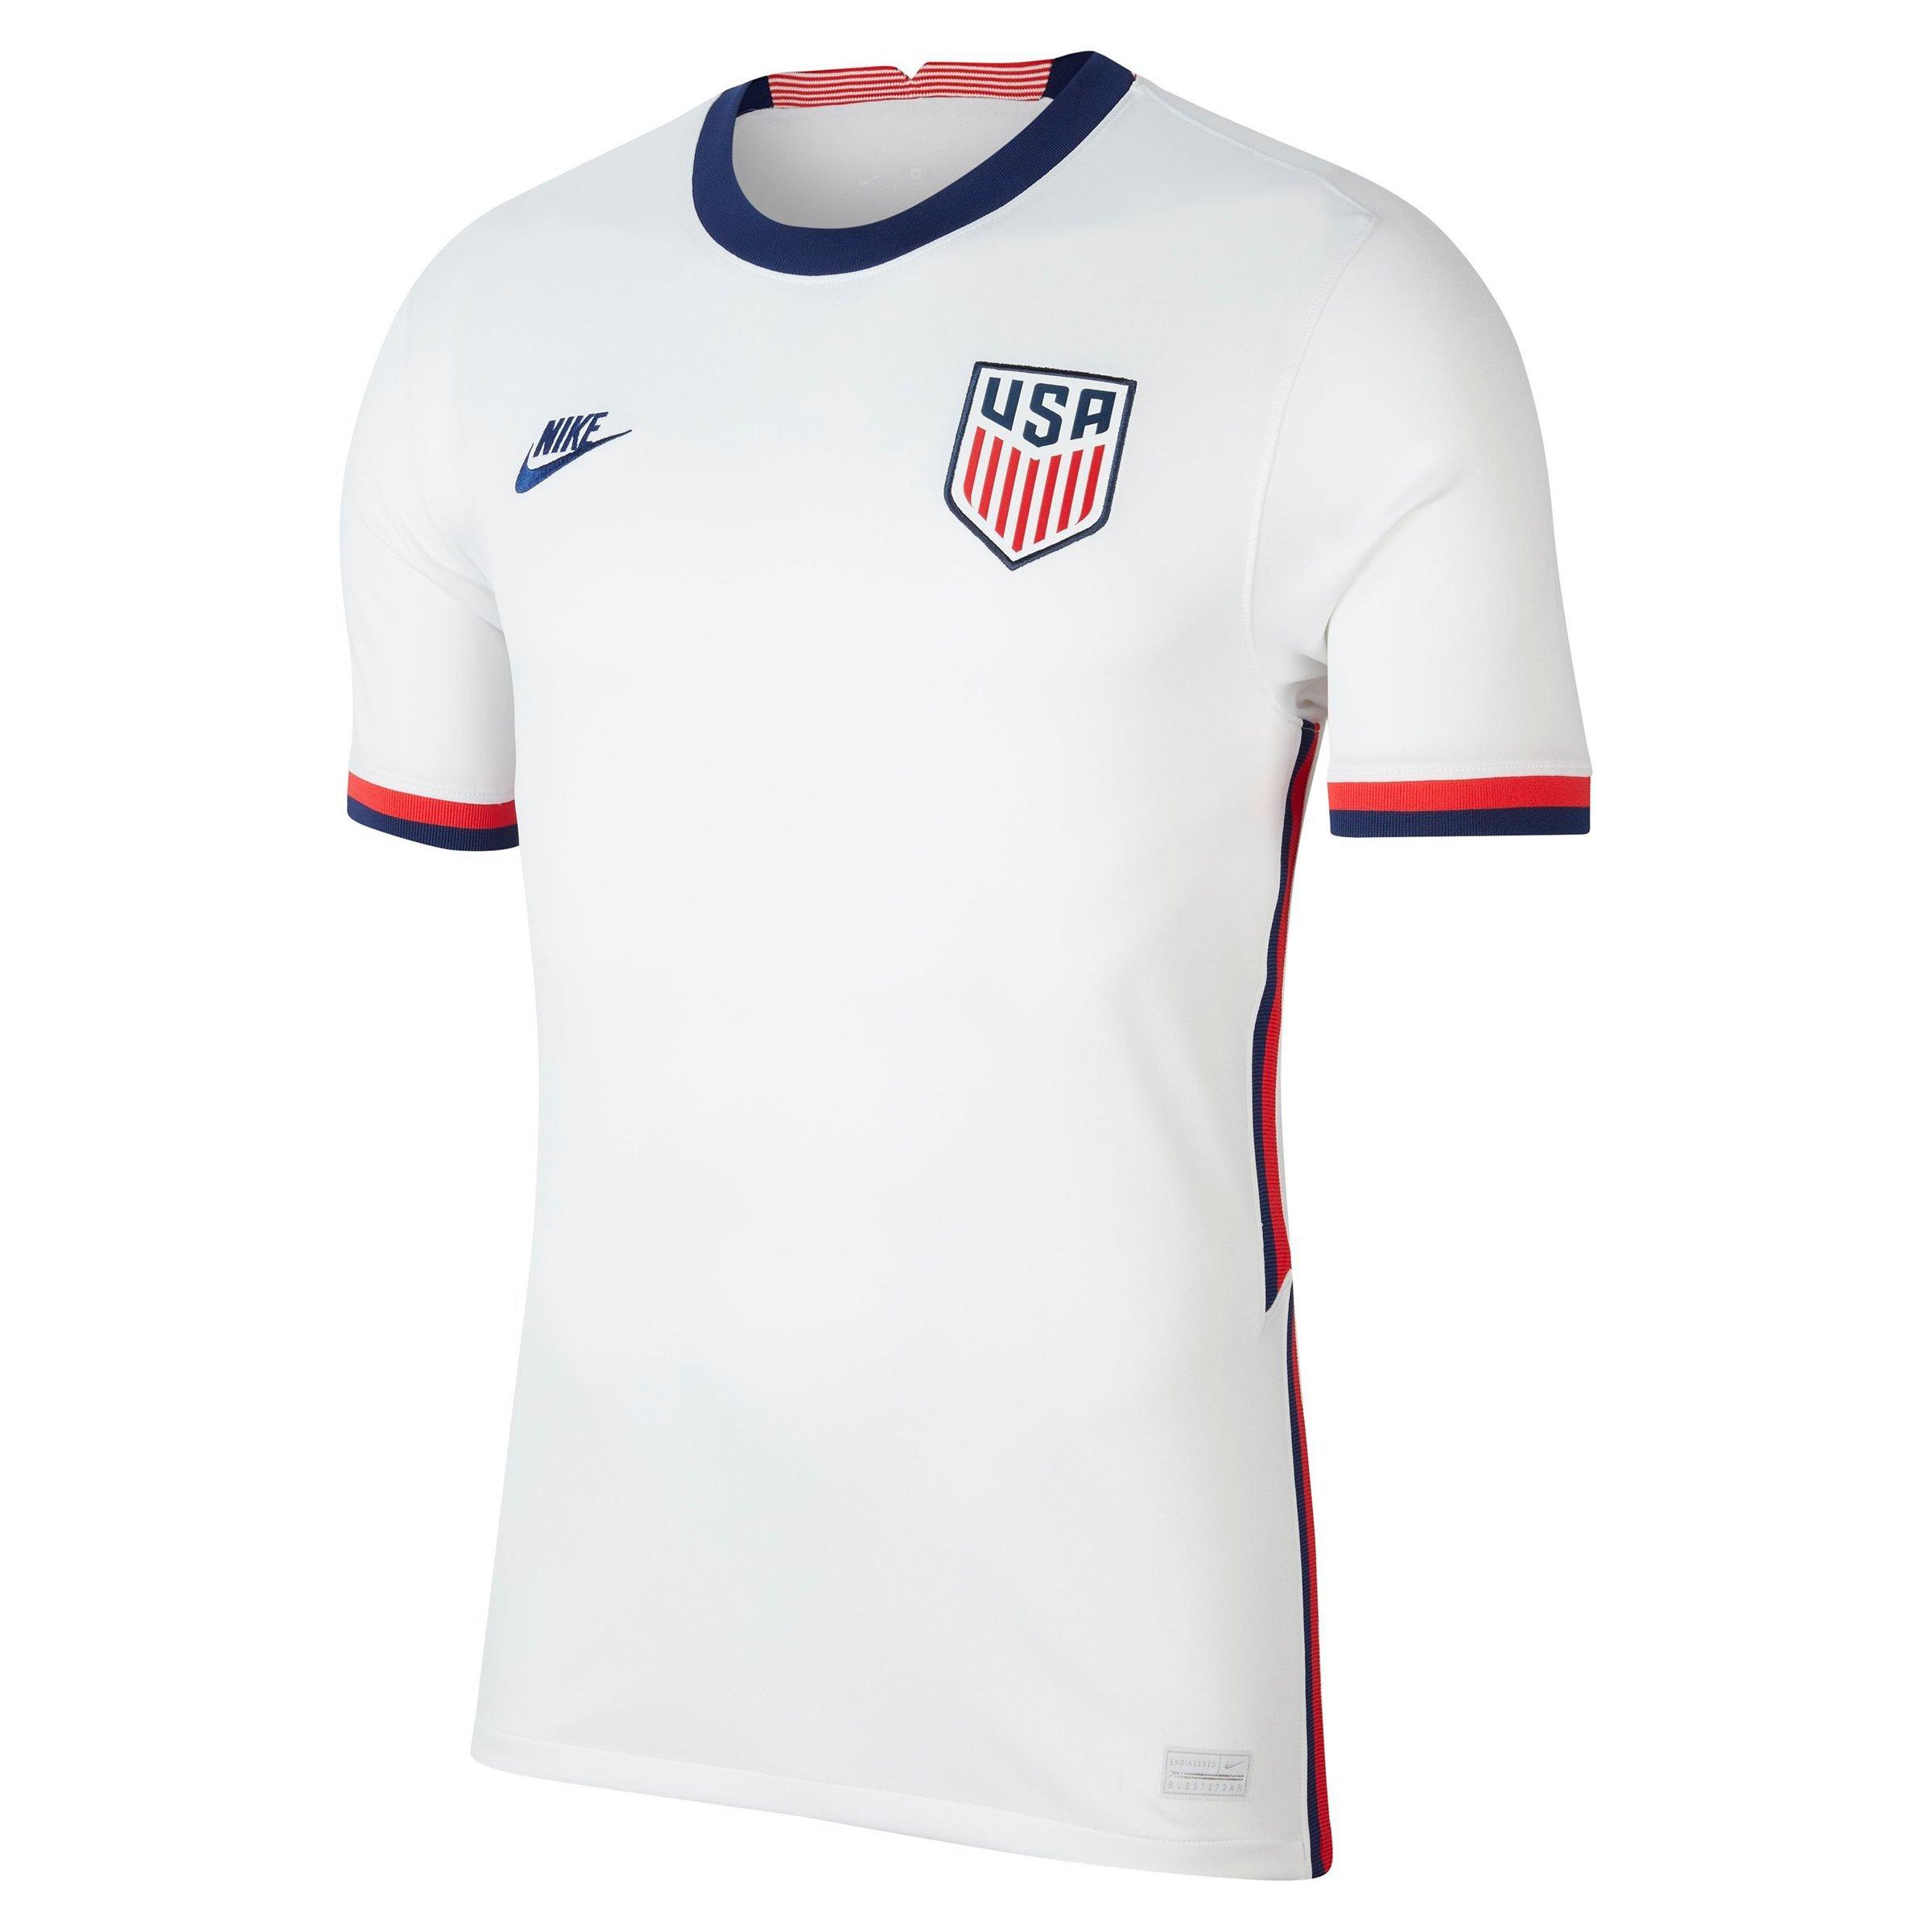 us soccer 2020 jersey